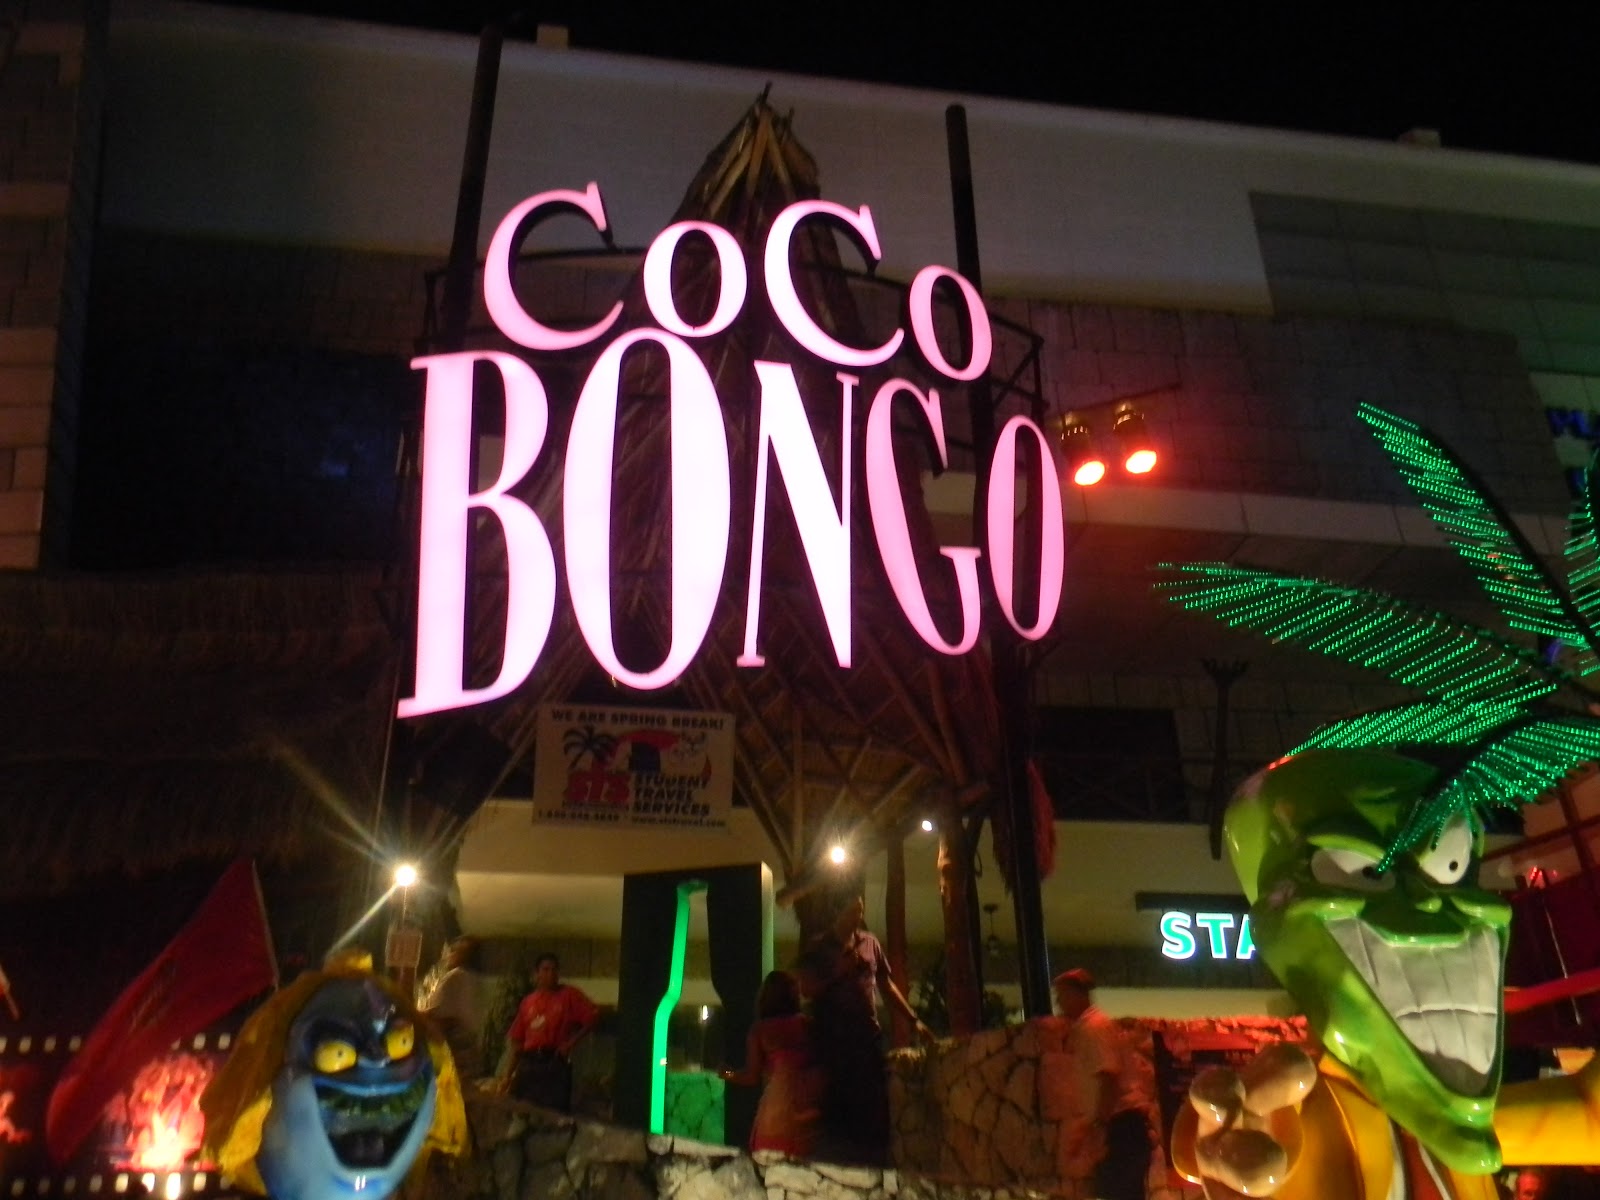 Coco bongo thong